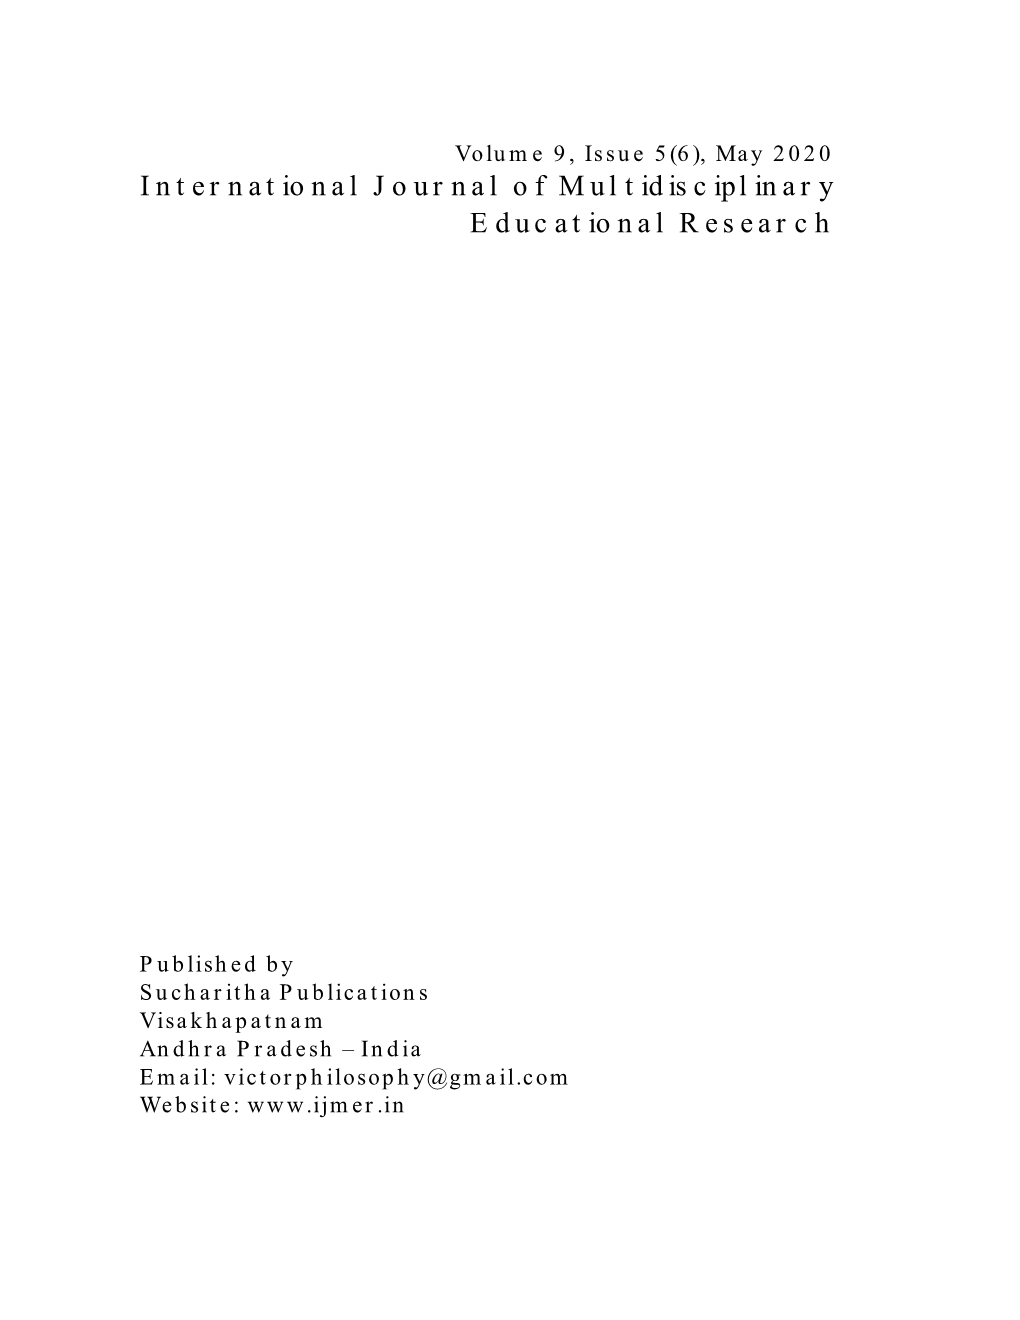 International Journal of Multidisciplinary Educational Research